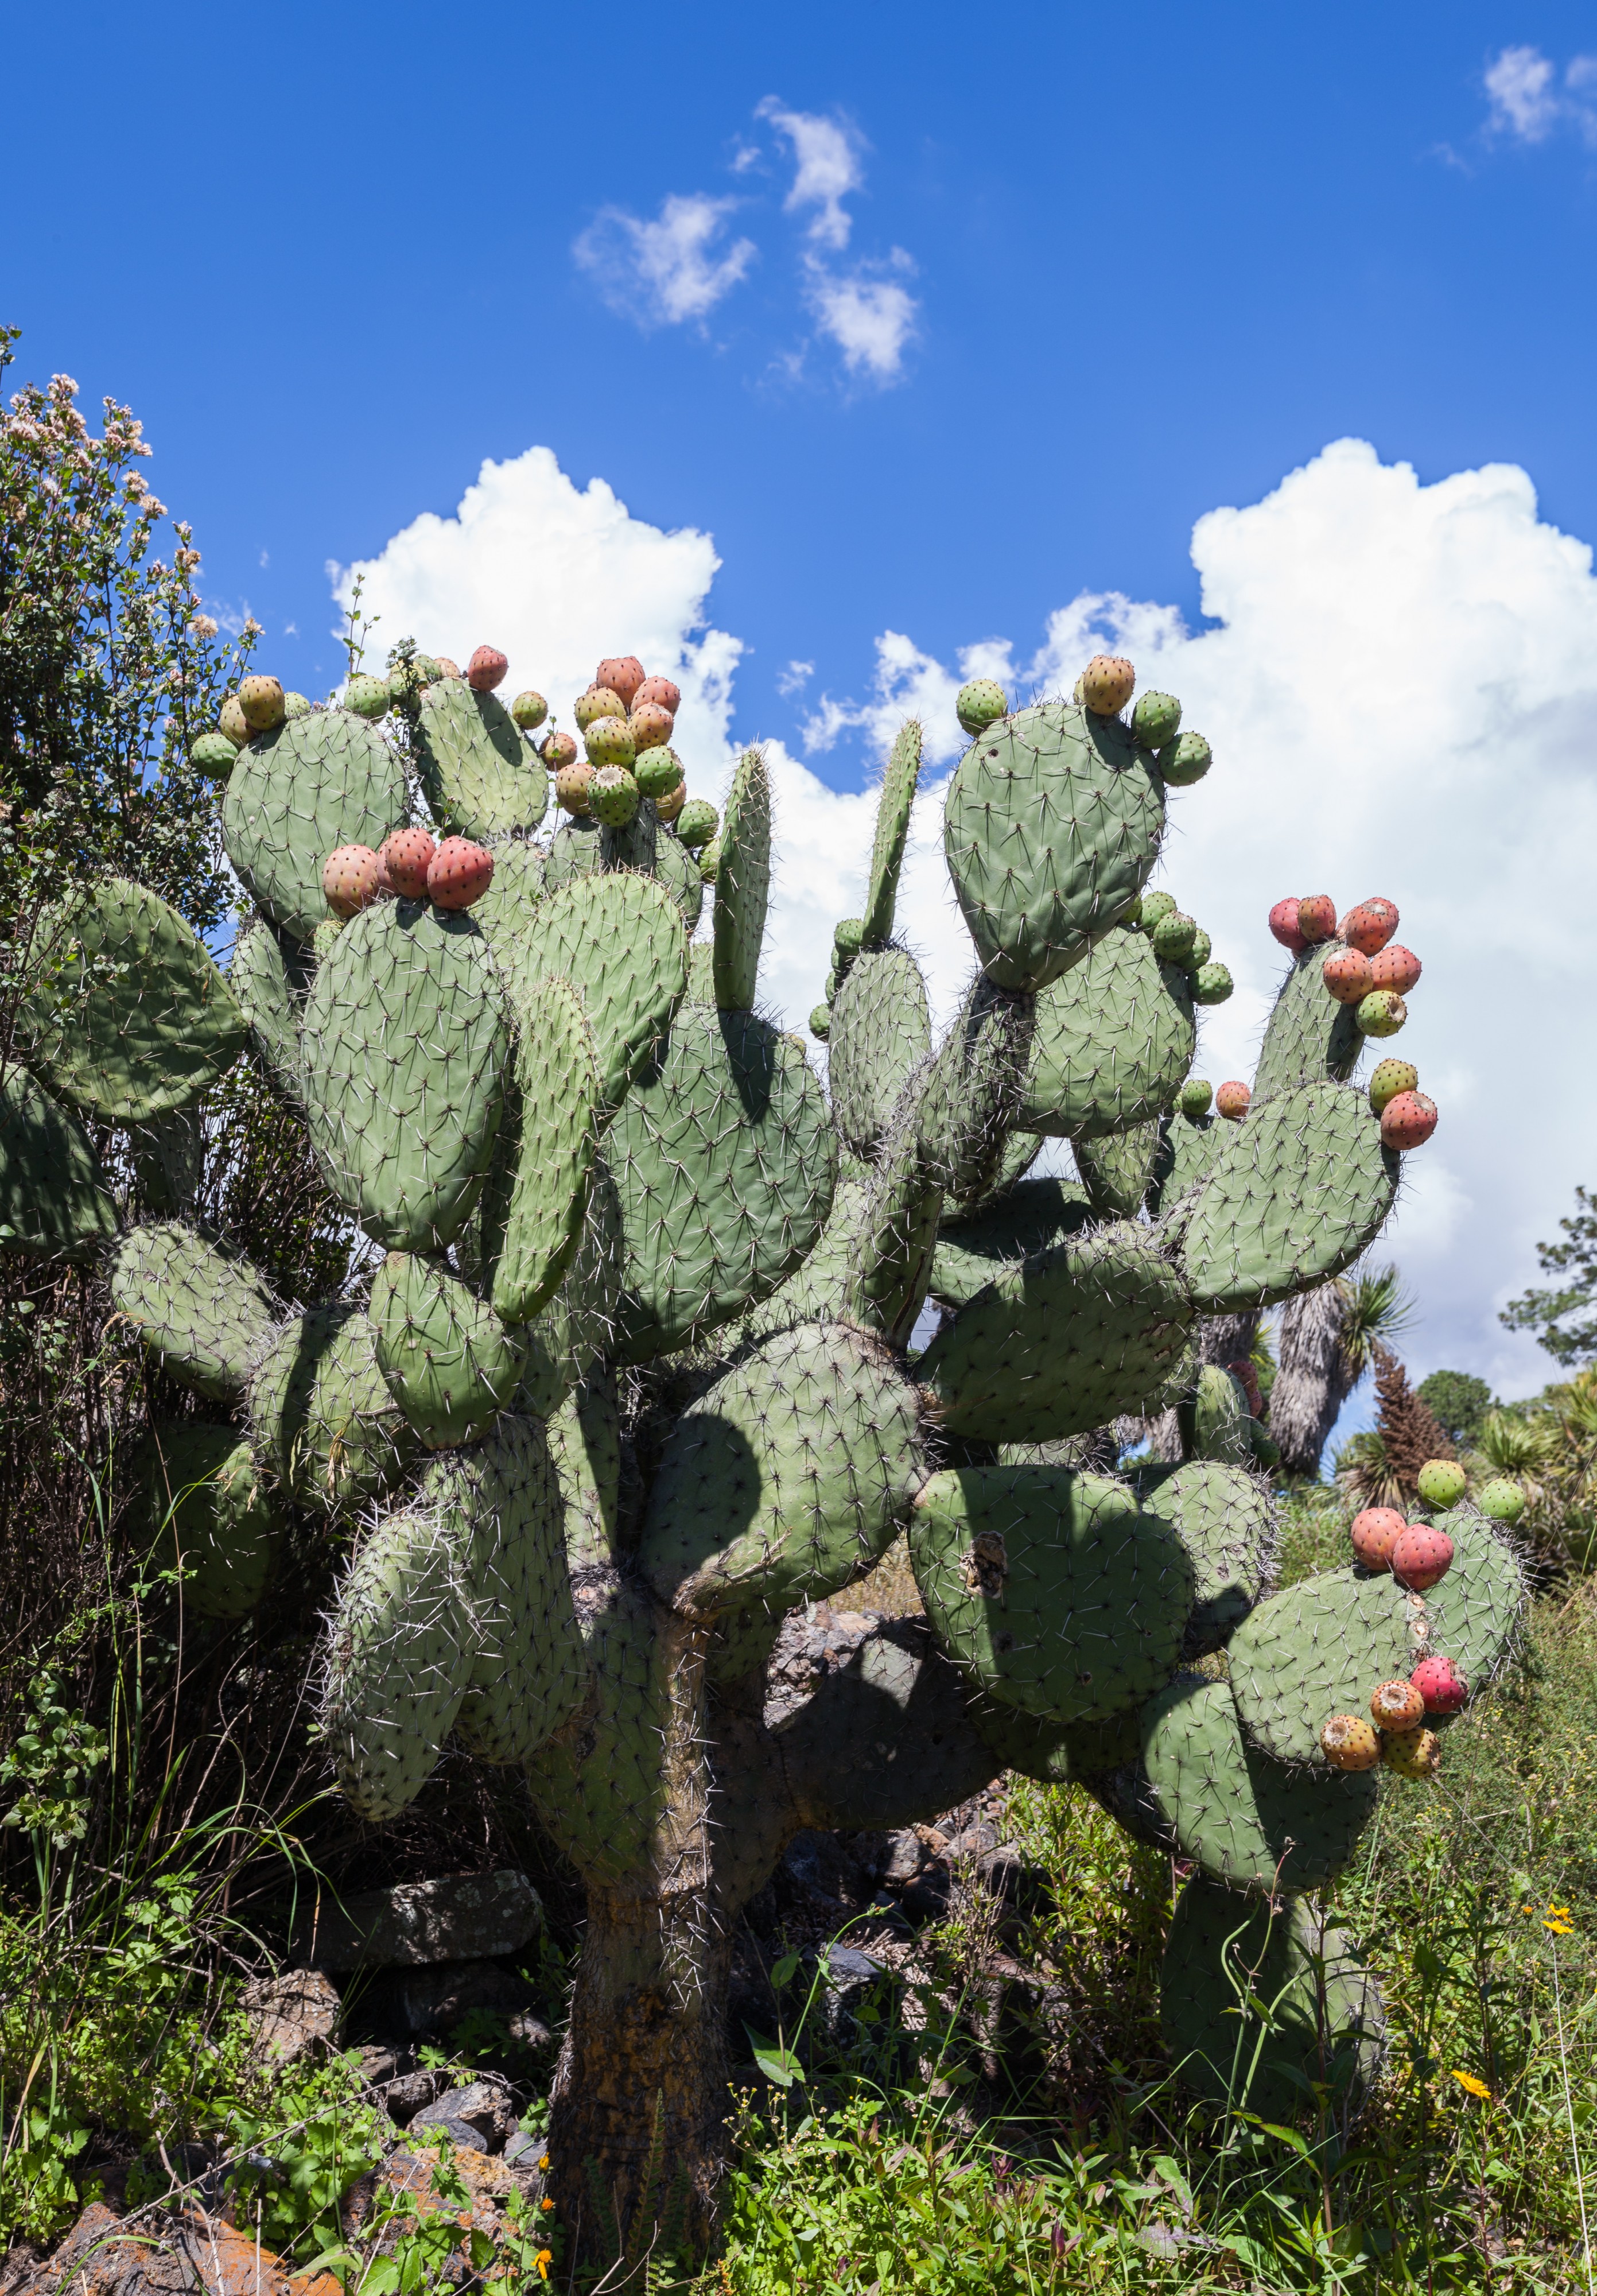 Cactus (Opuntia ficus-indica), Zona arqueológica de Cantona, Puebla, México, 2013-10-11, DD 01